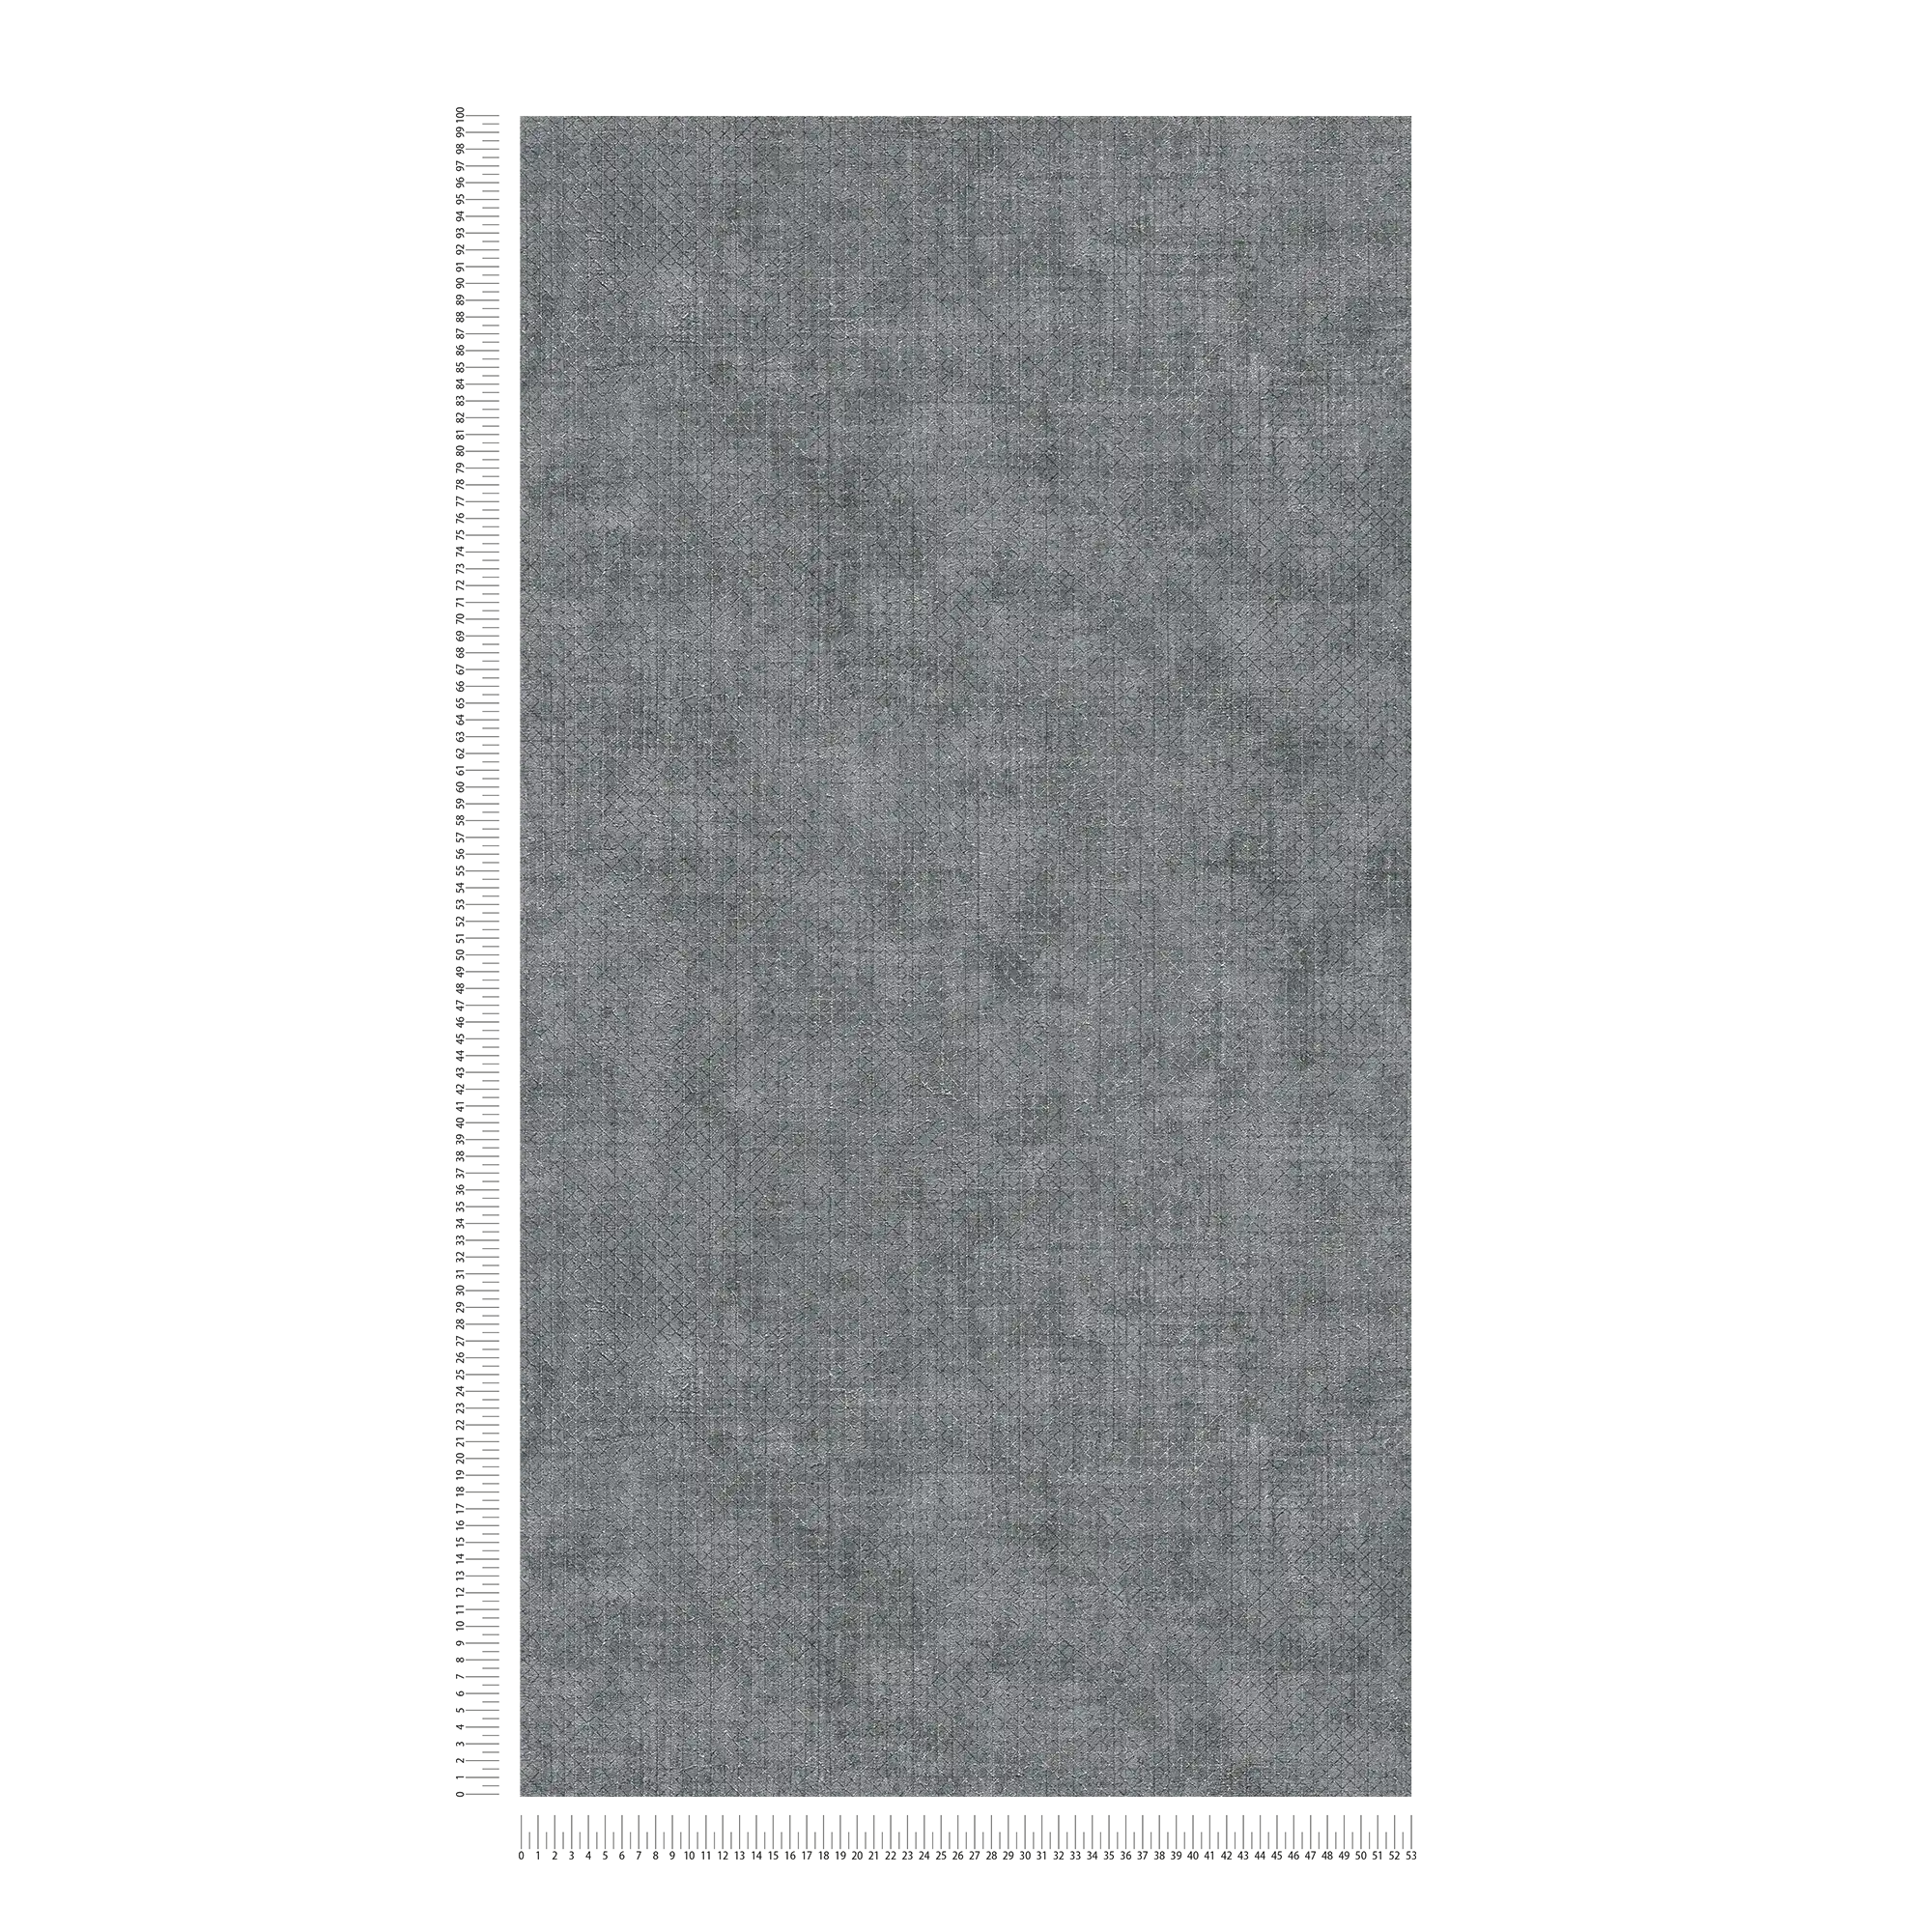             Dark grey mottled wallpaper with metallic line pattern
        